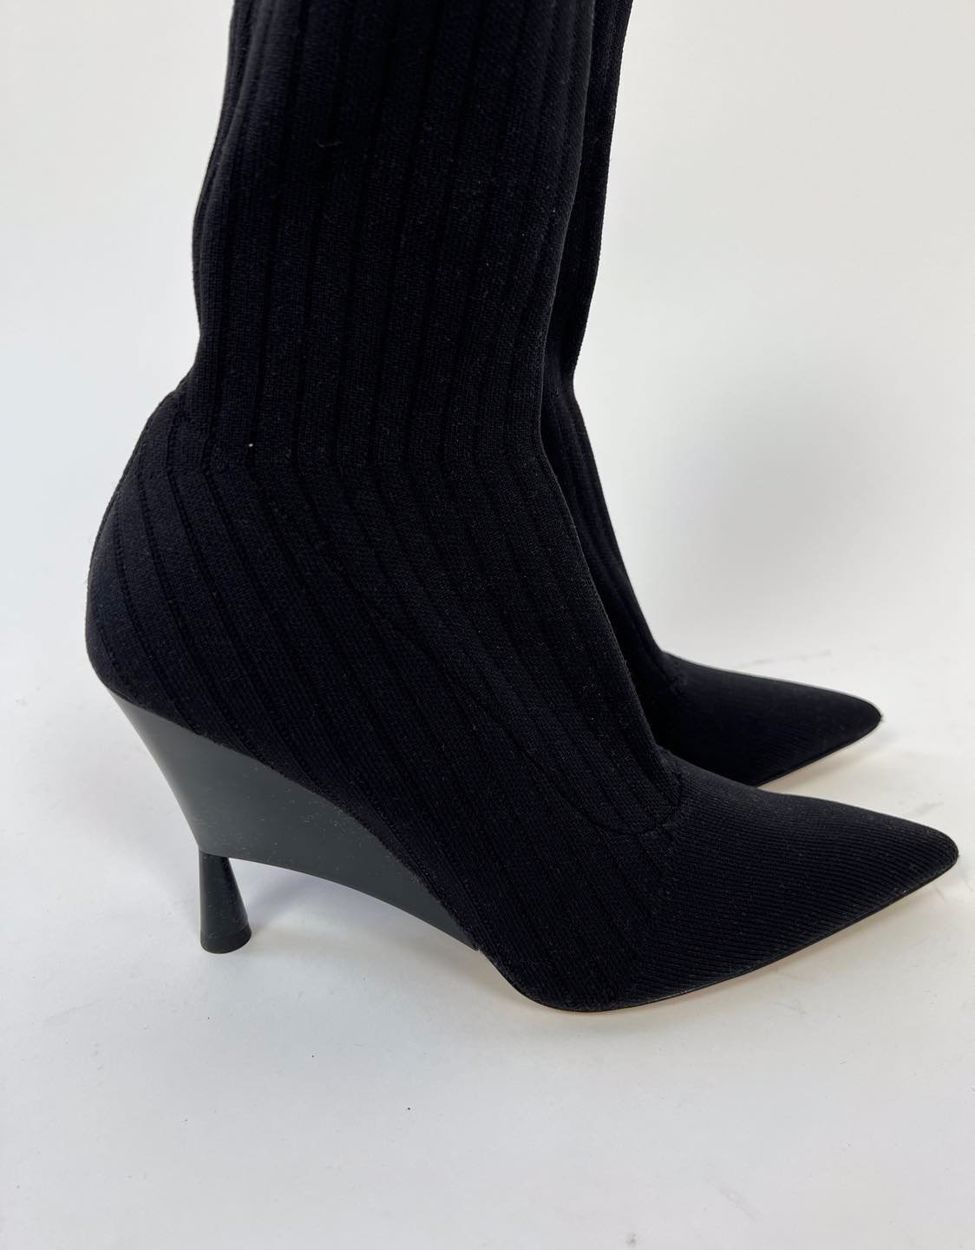 Gia x RHW boots sock black size 39